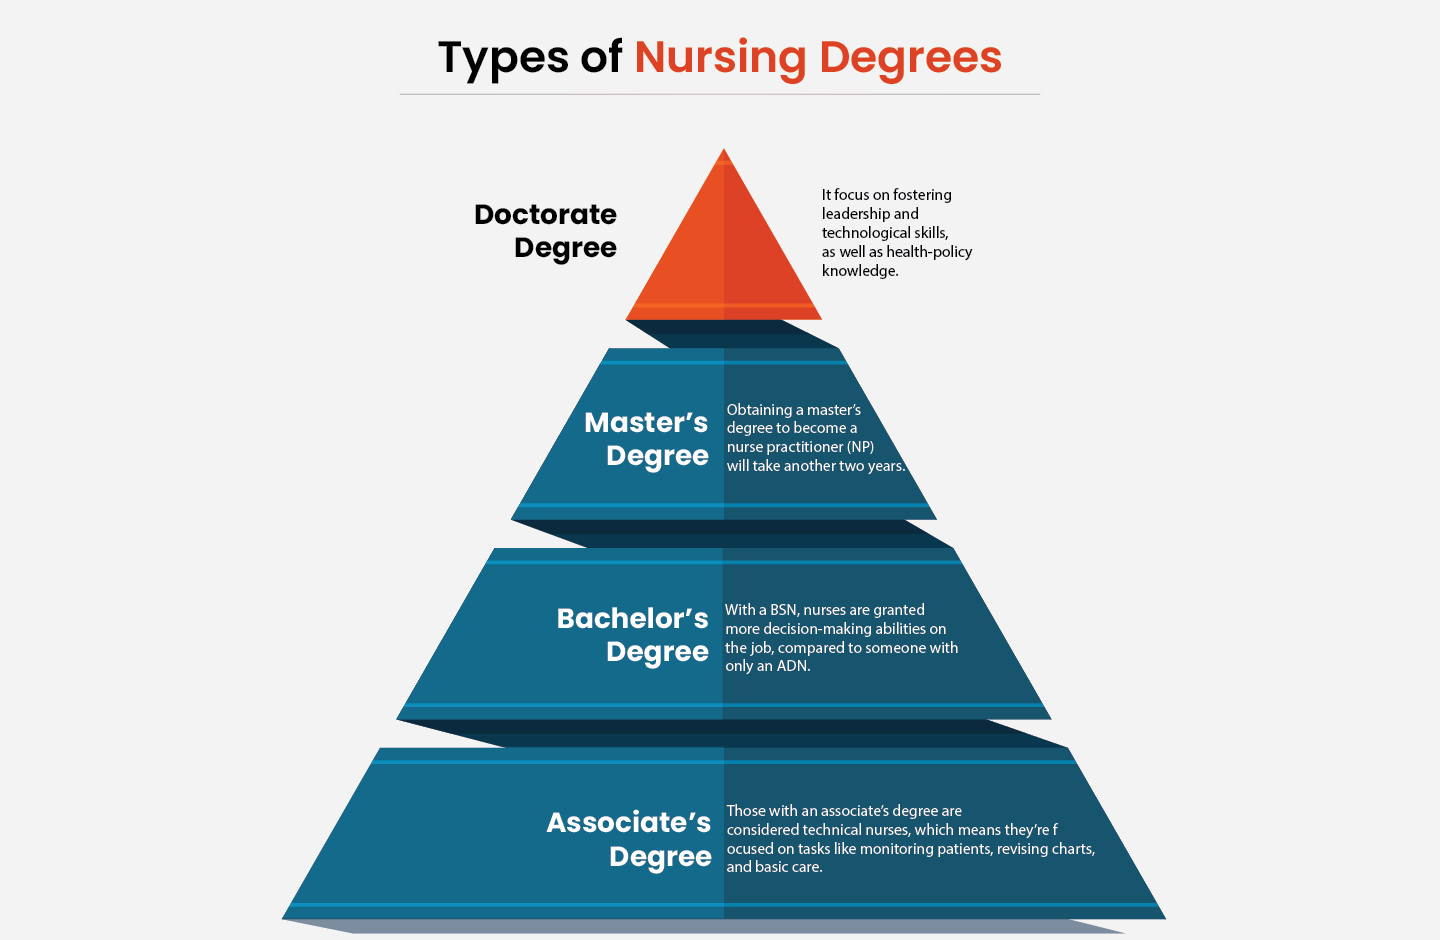 Type of nursing degree in America